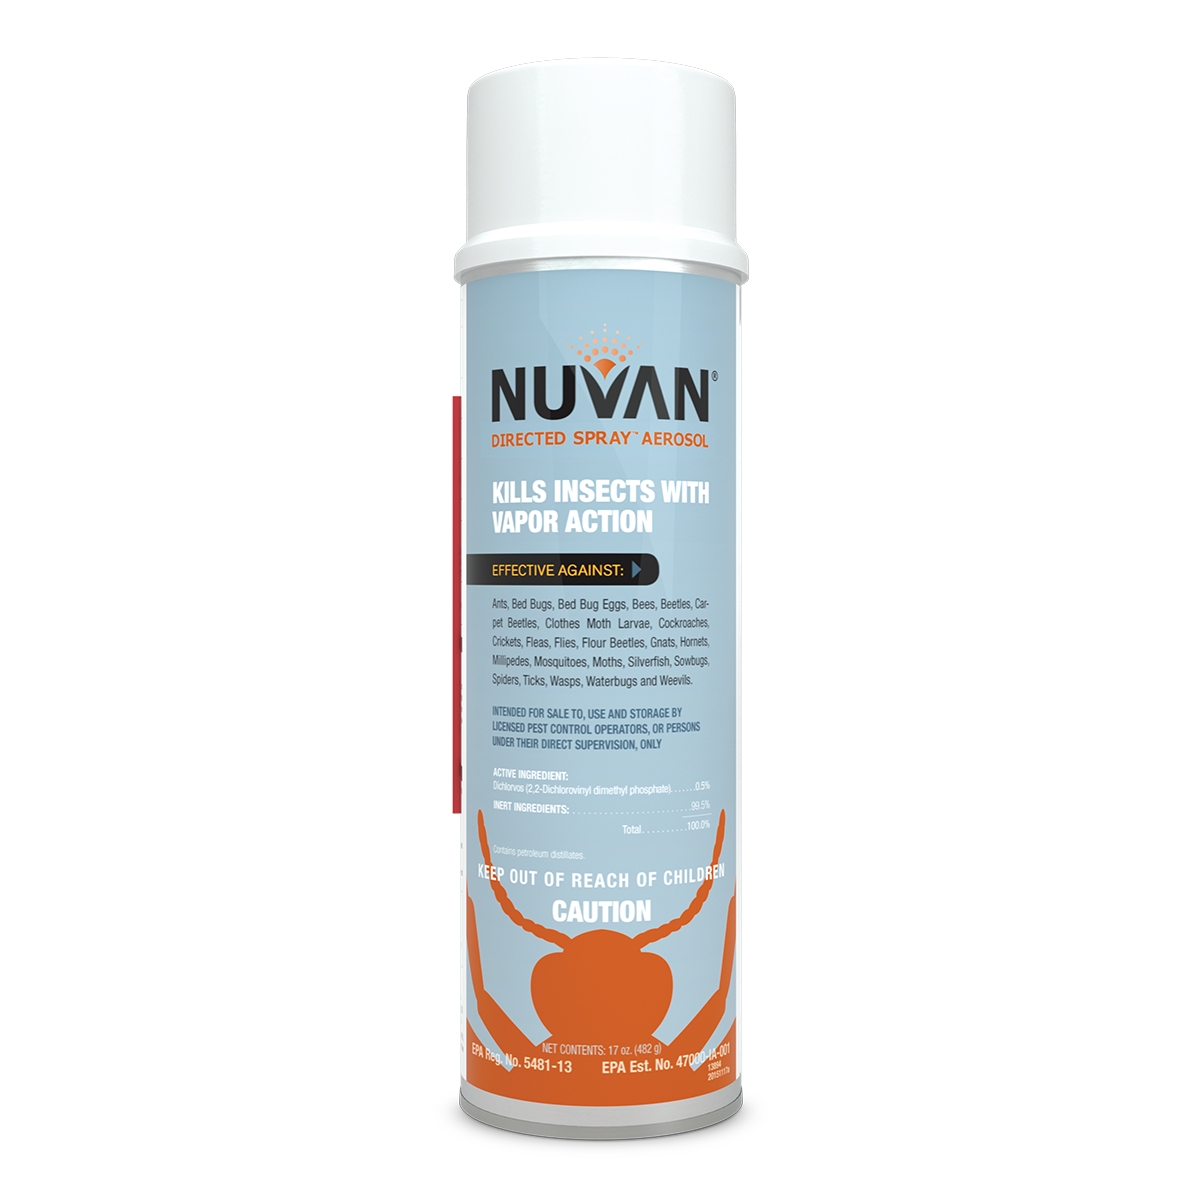 Nuvan Directed Spray Aerosol product package